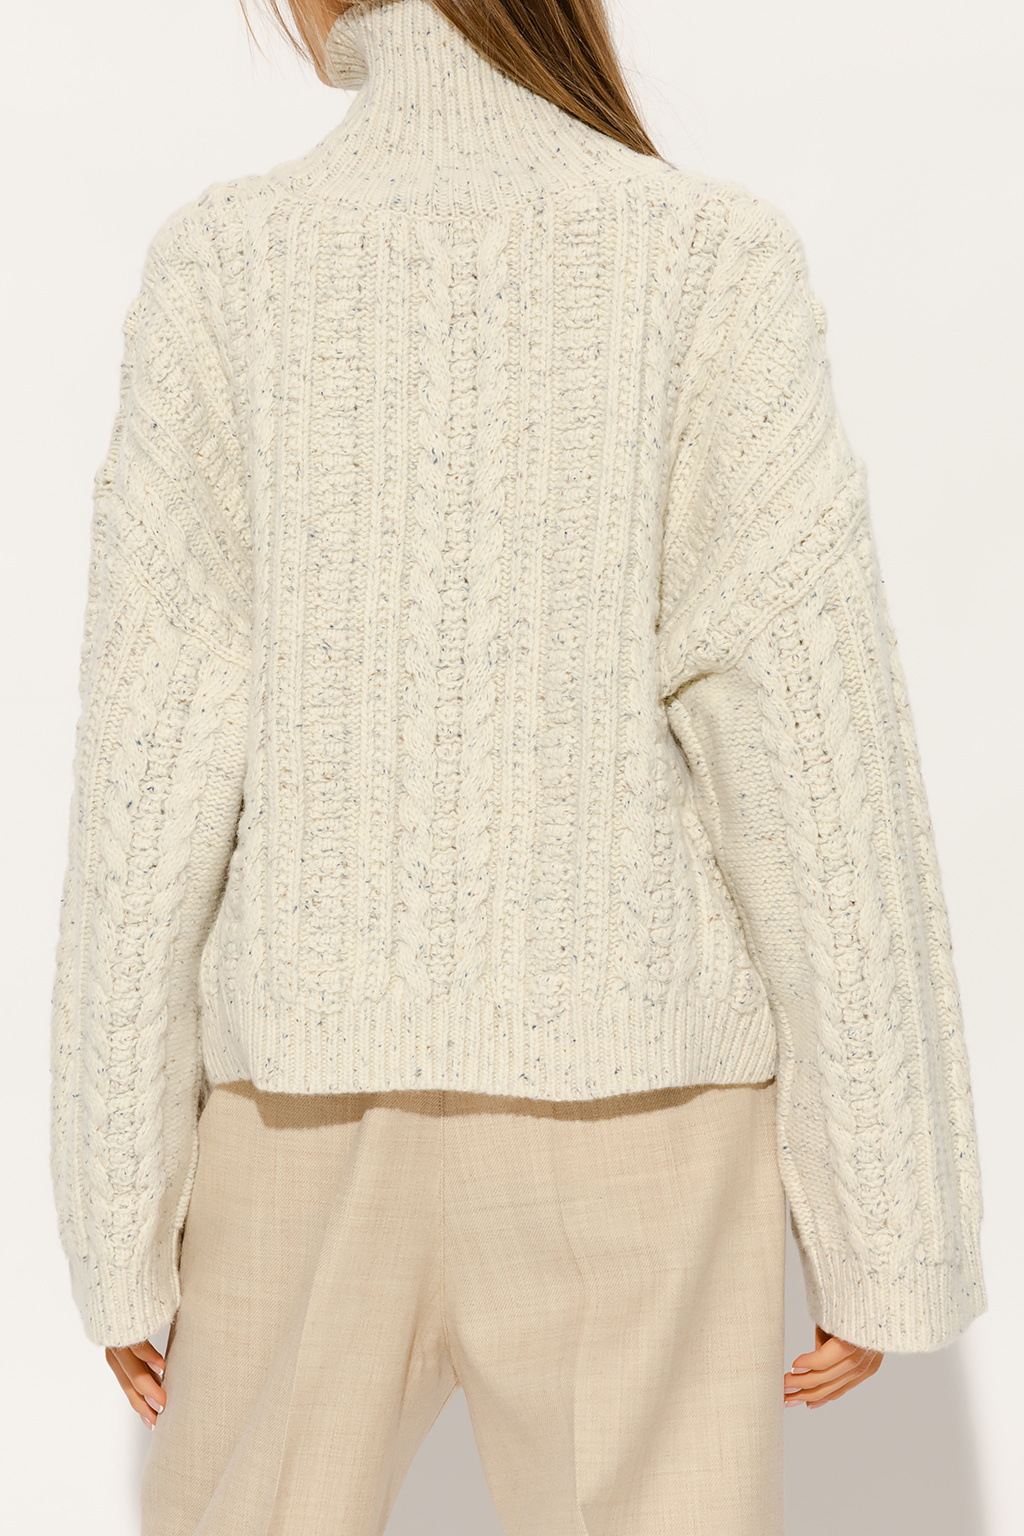 TOTEME Loose-fitting turtleneck sweater